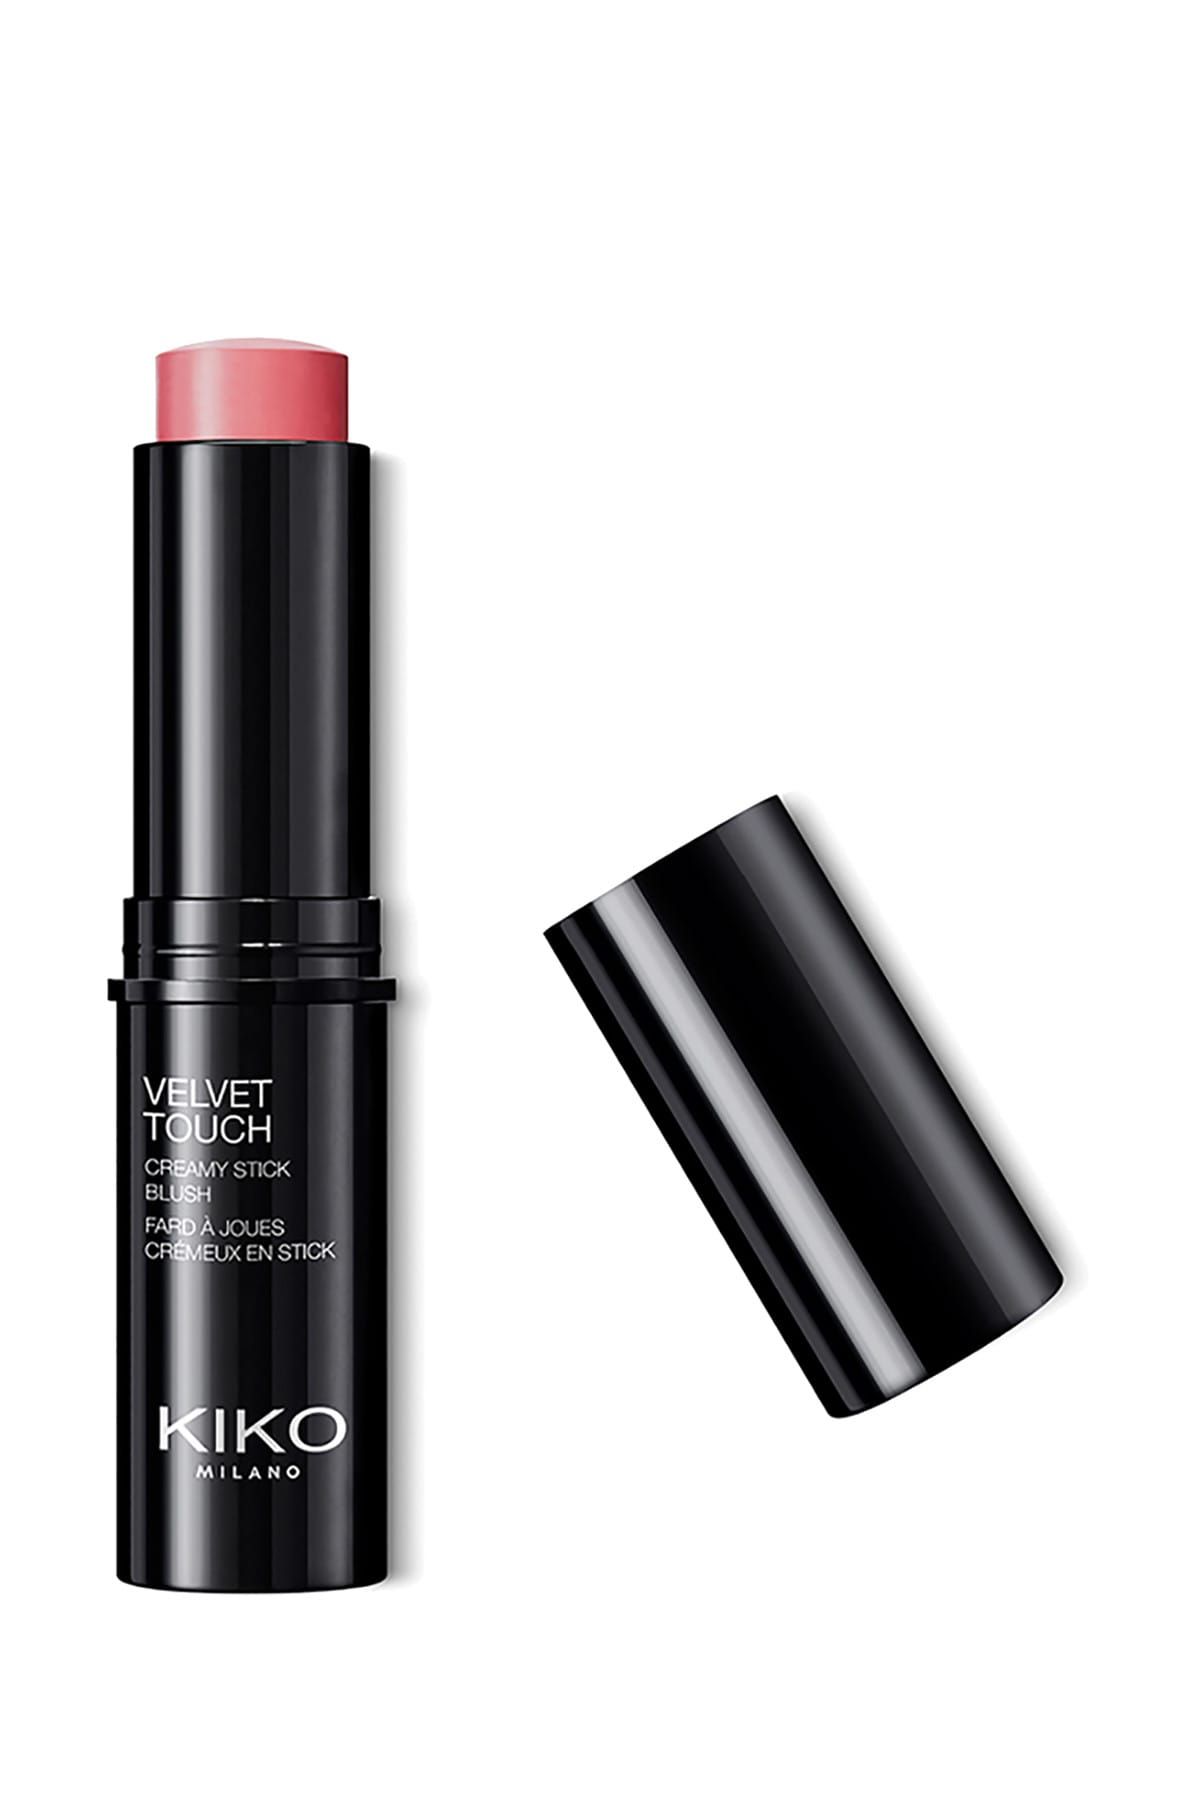 KIKO Stick Allık - Velvet Touch Creamy Stick Blush 06 Geranium 10 g 8025272604956